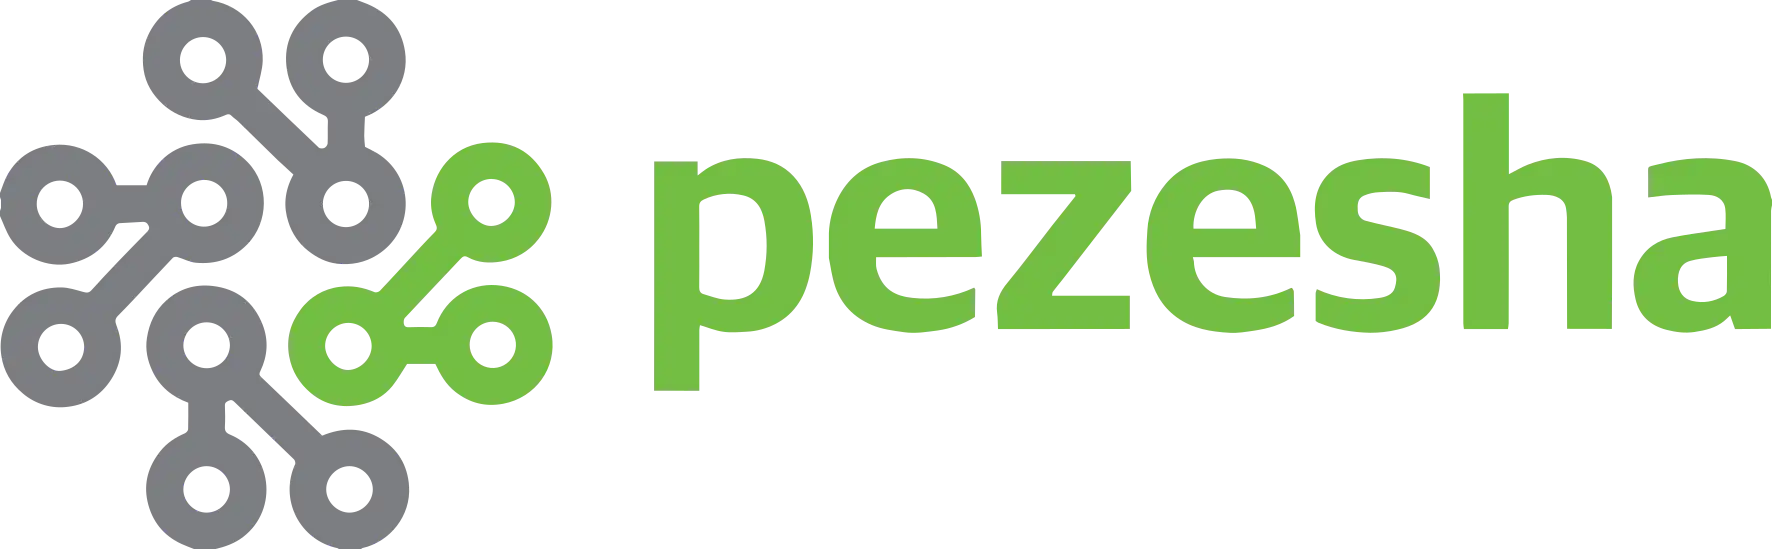 Pezesha Support